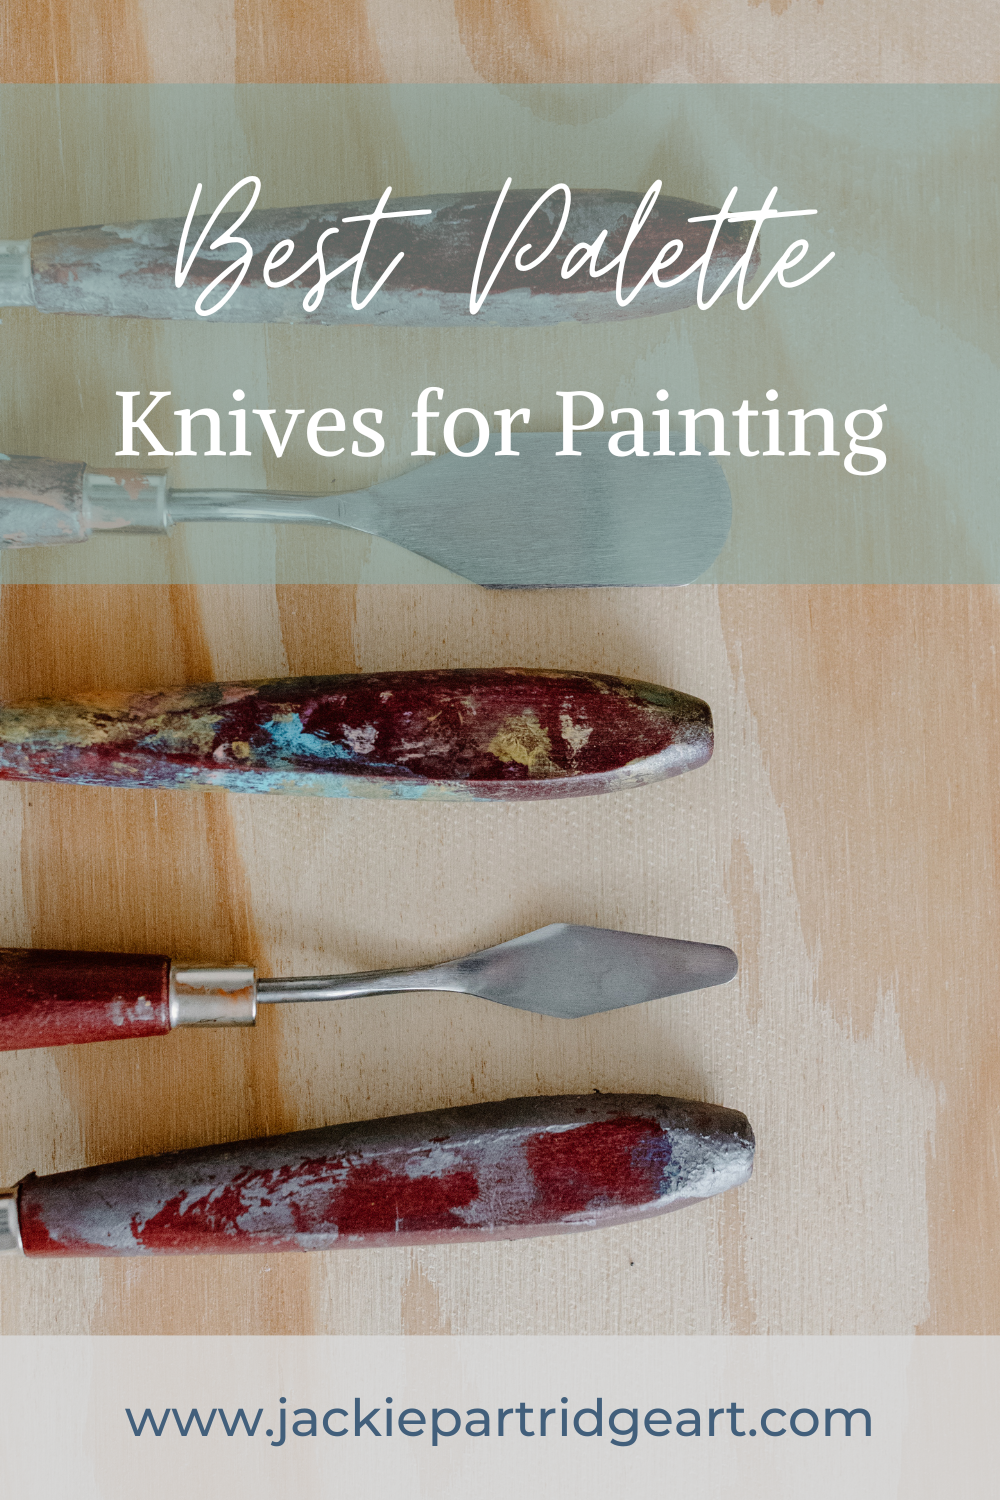 10 Best Palette Knives Review - The Jerusalem Post